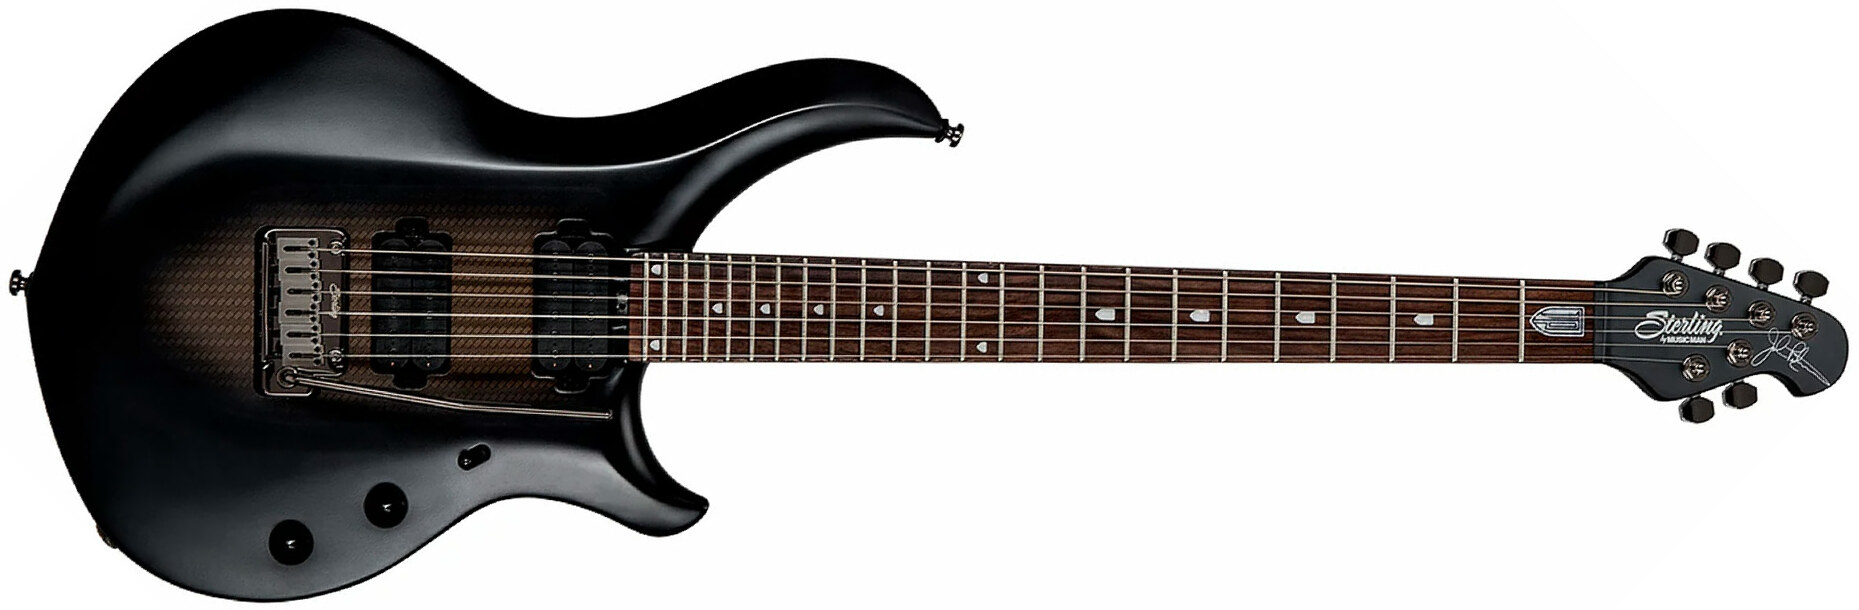 Sterling By Musicman John Petrucci Majesty Maj100 Signature Hh Trem Rw - Stealth Black - Str shape electric guitar - Main picture